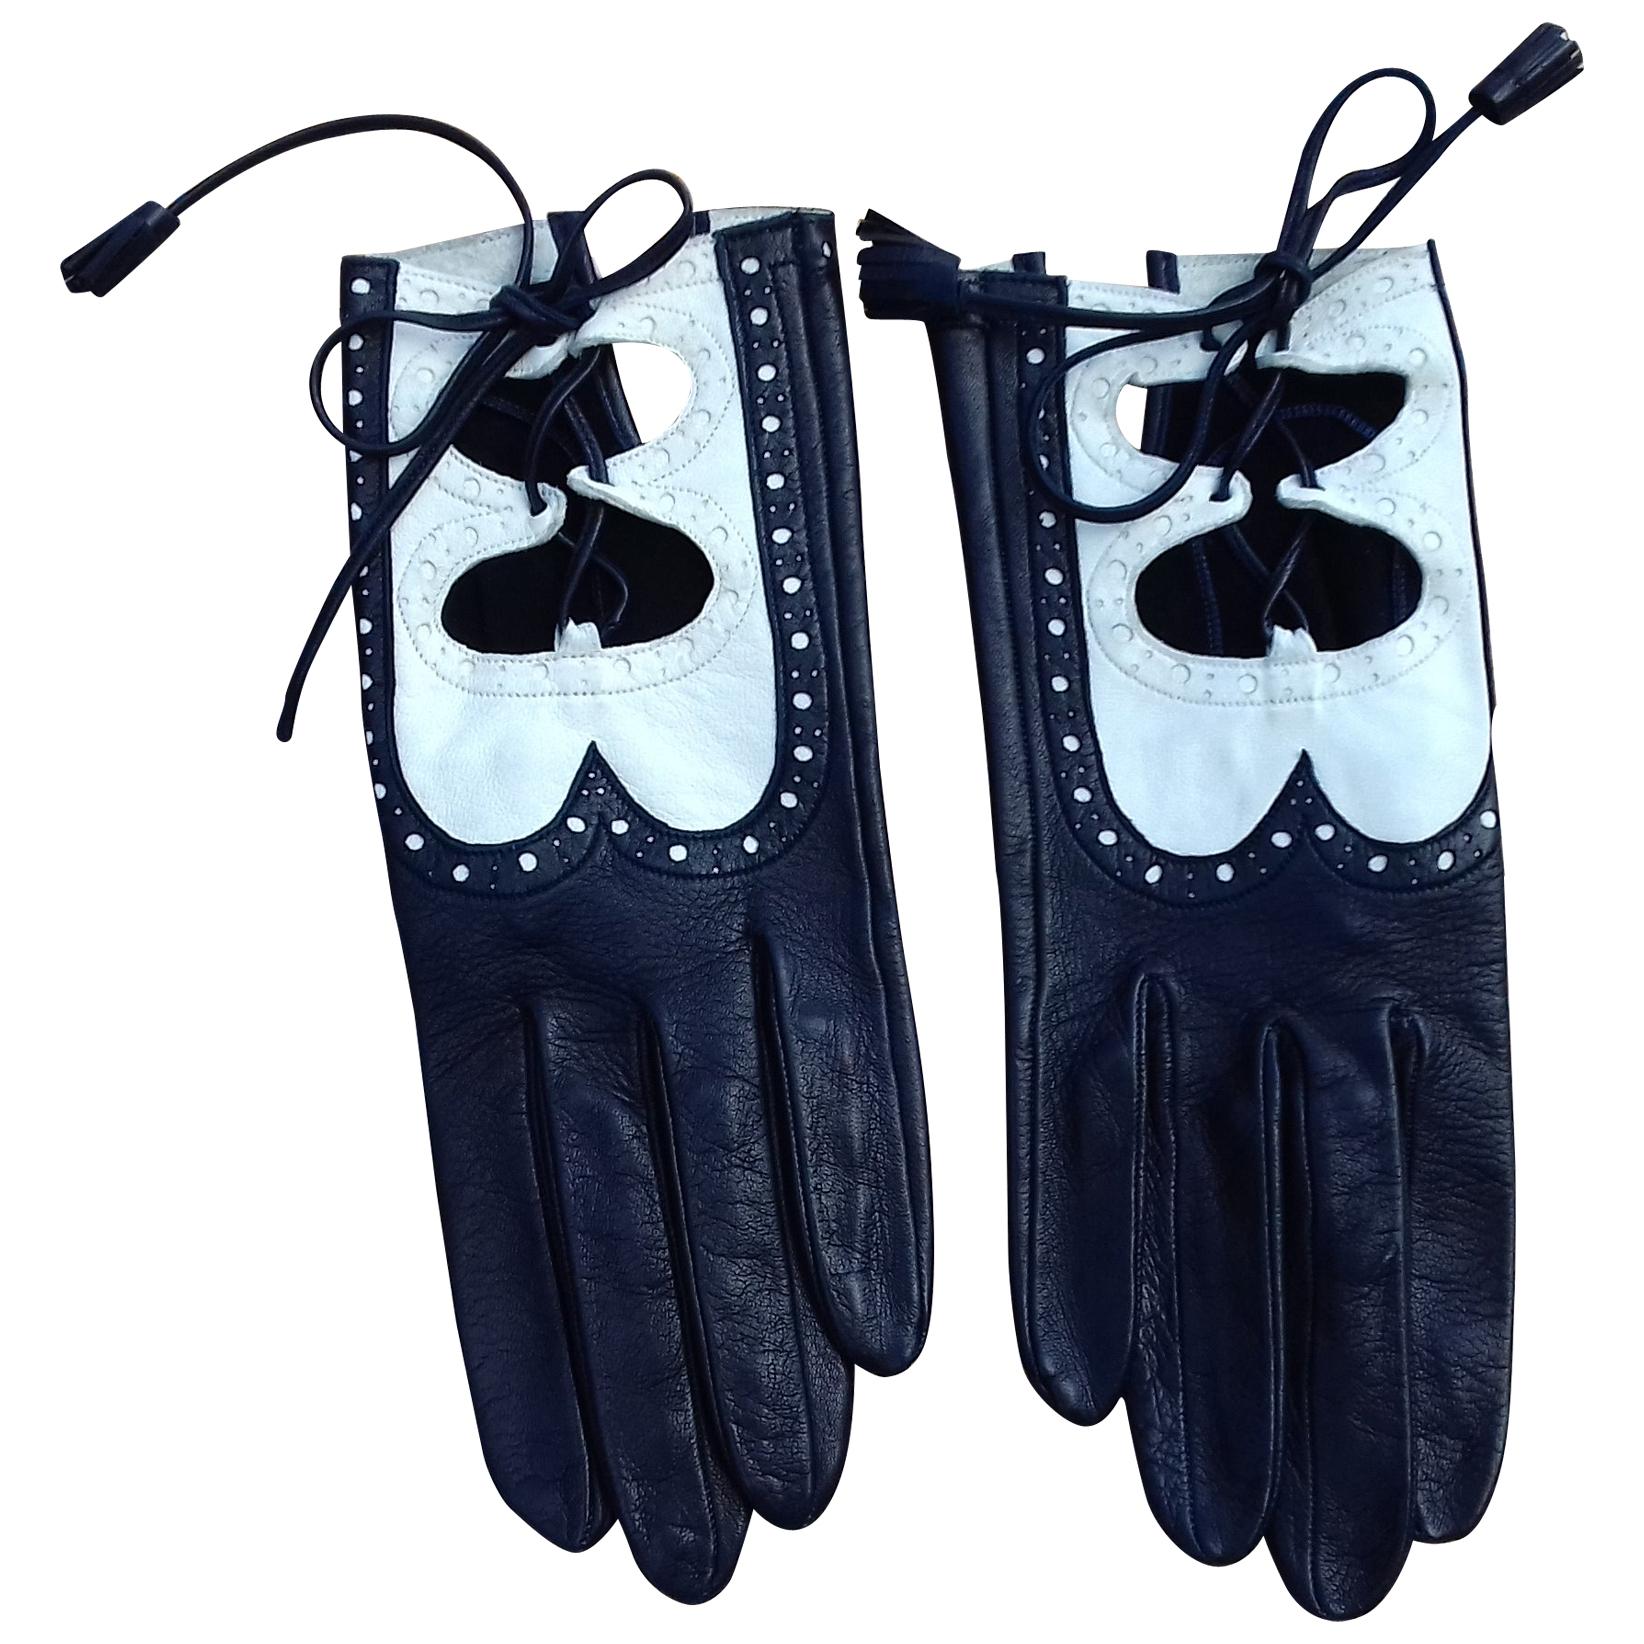 Hermès Gloves Dark Blue and White Leather Gloves Ghillies Size 6/7